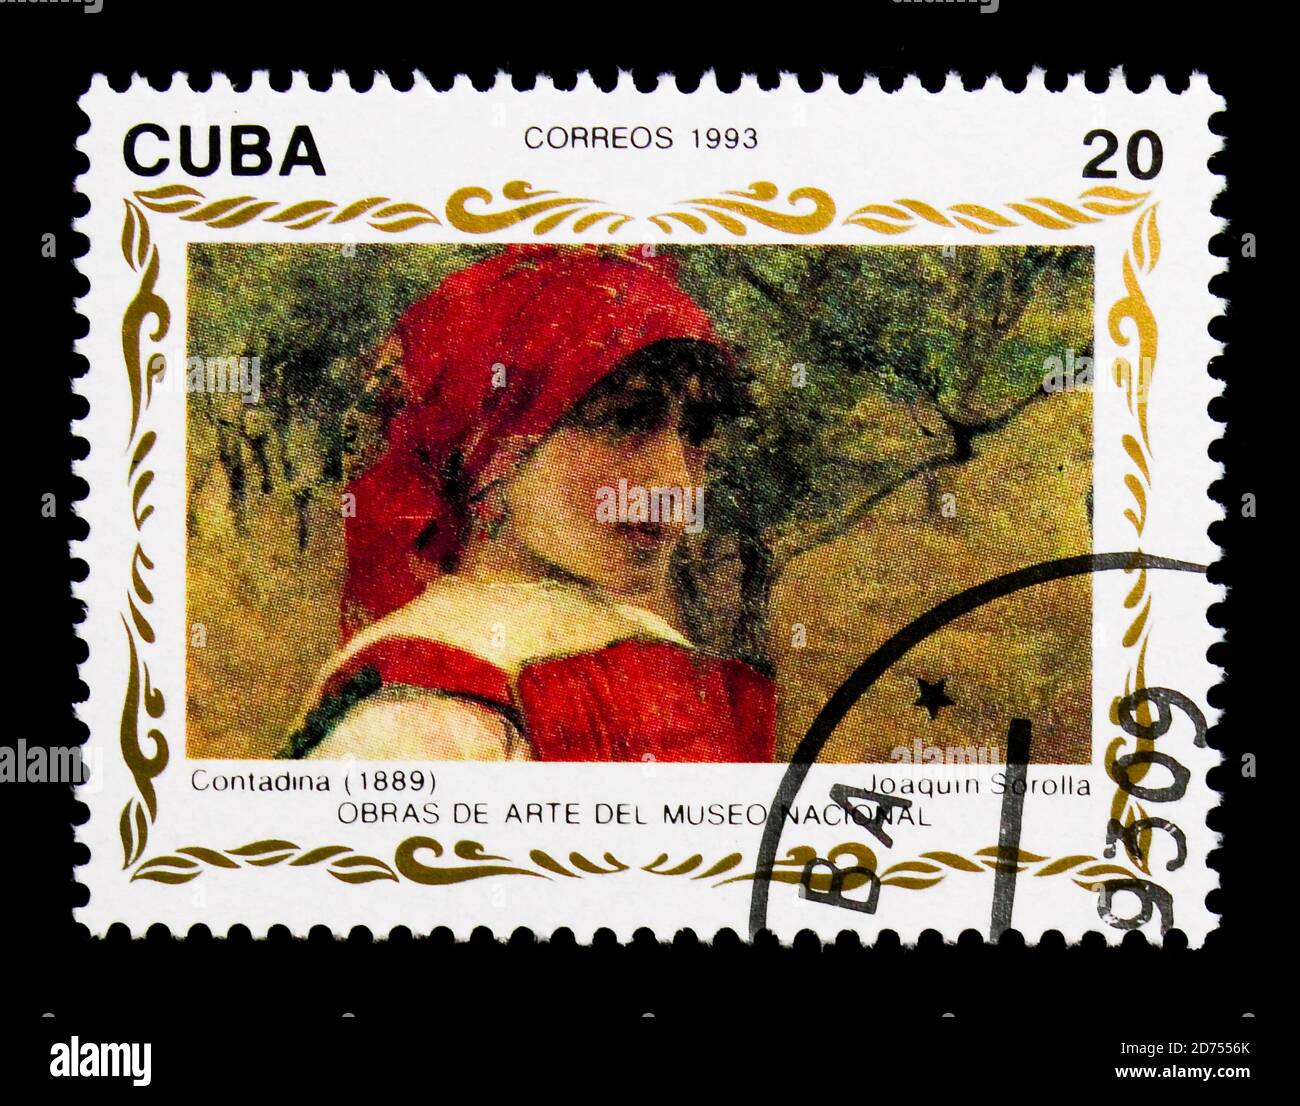 MOSCOU, RUSSIE - 25 NOVEMBRE 2017 : un timbre imprimé à Cuba montre Contadina, les peintures de Joaquin Sorolla - Galerie nationale de la Havane série, circ Banque D'Images